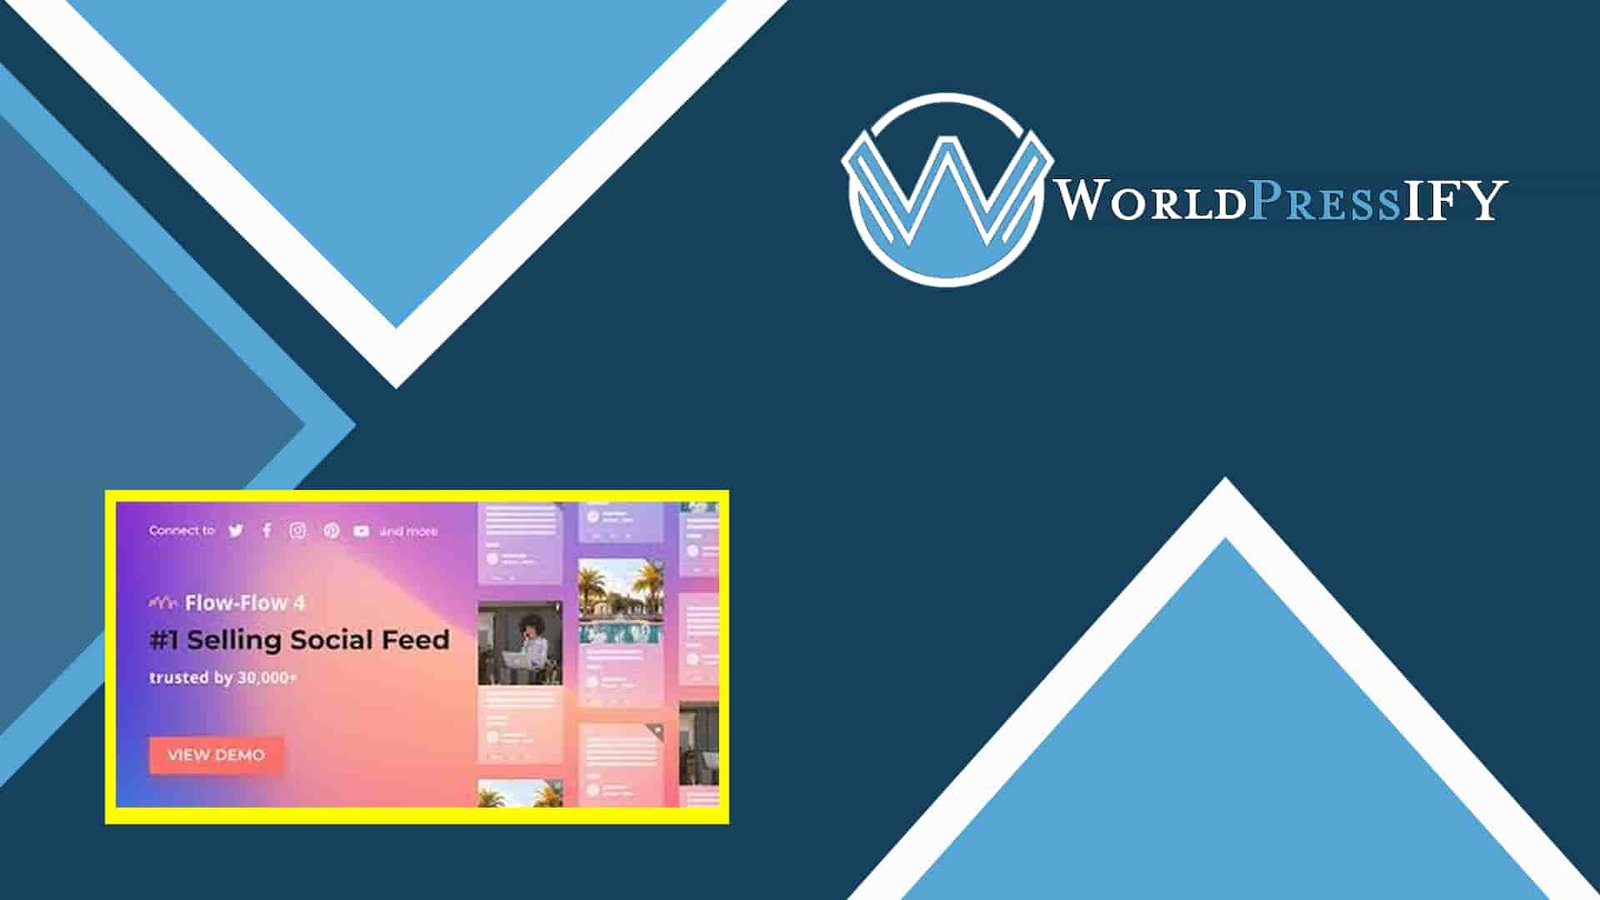 WordPress Social Stream - WorldPress IFY